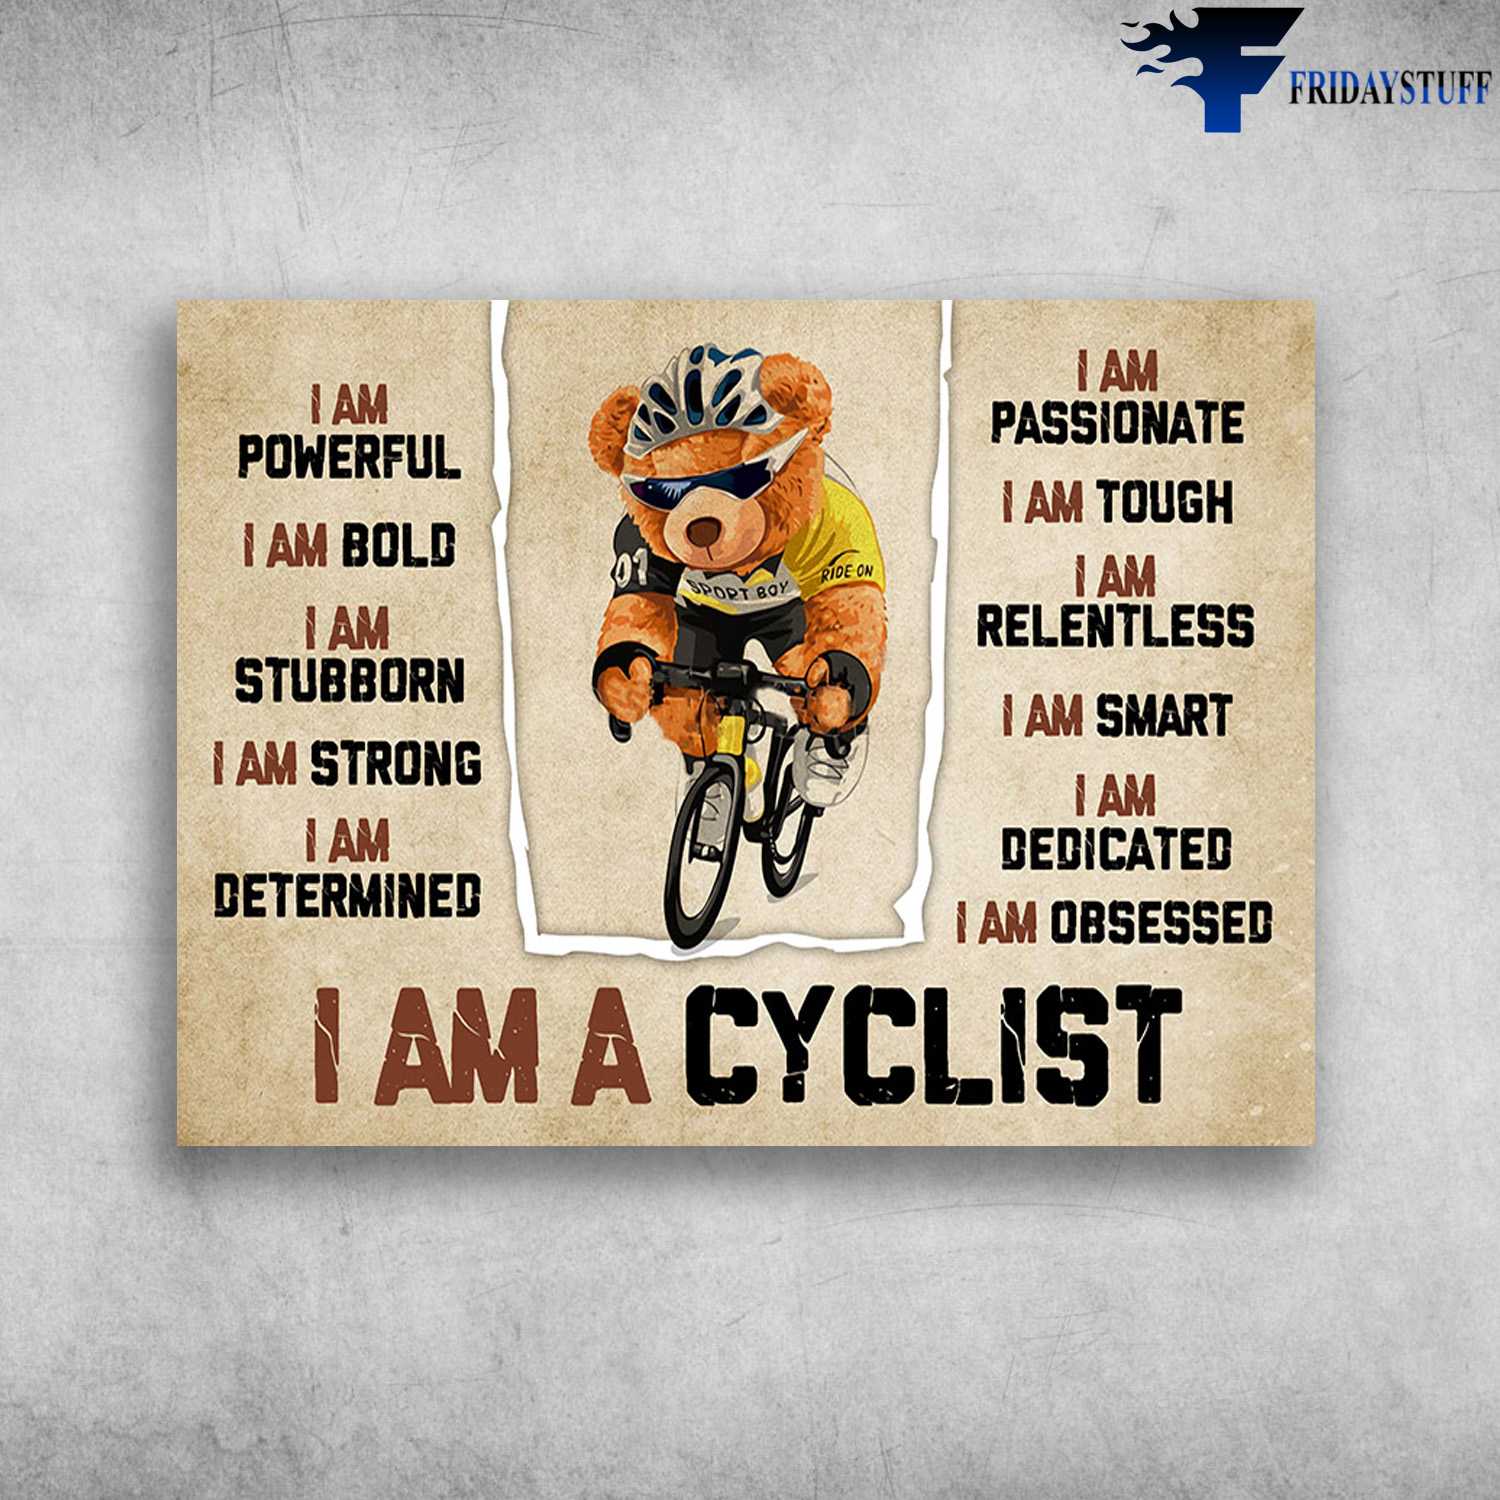 Teddy Cycling - I Am Powerful, I Am Bold, I Am Stubborn, I Am Strong, I Am Determined, I Am Passionate, I Am A Cyclist, Biker Lover